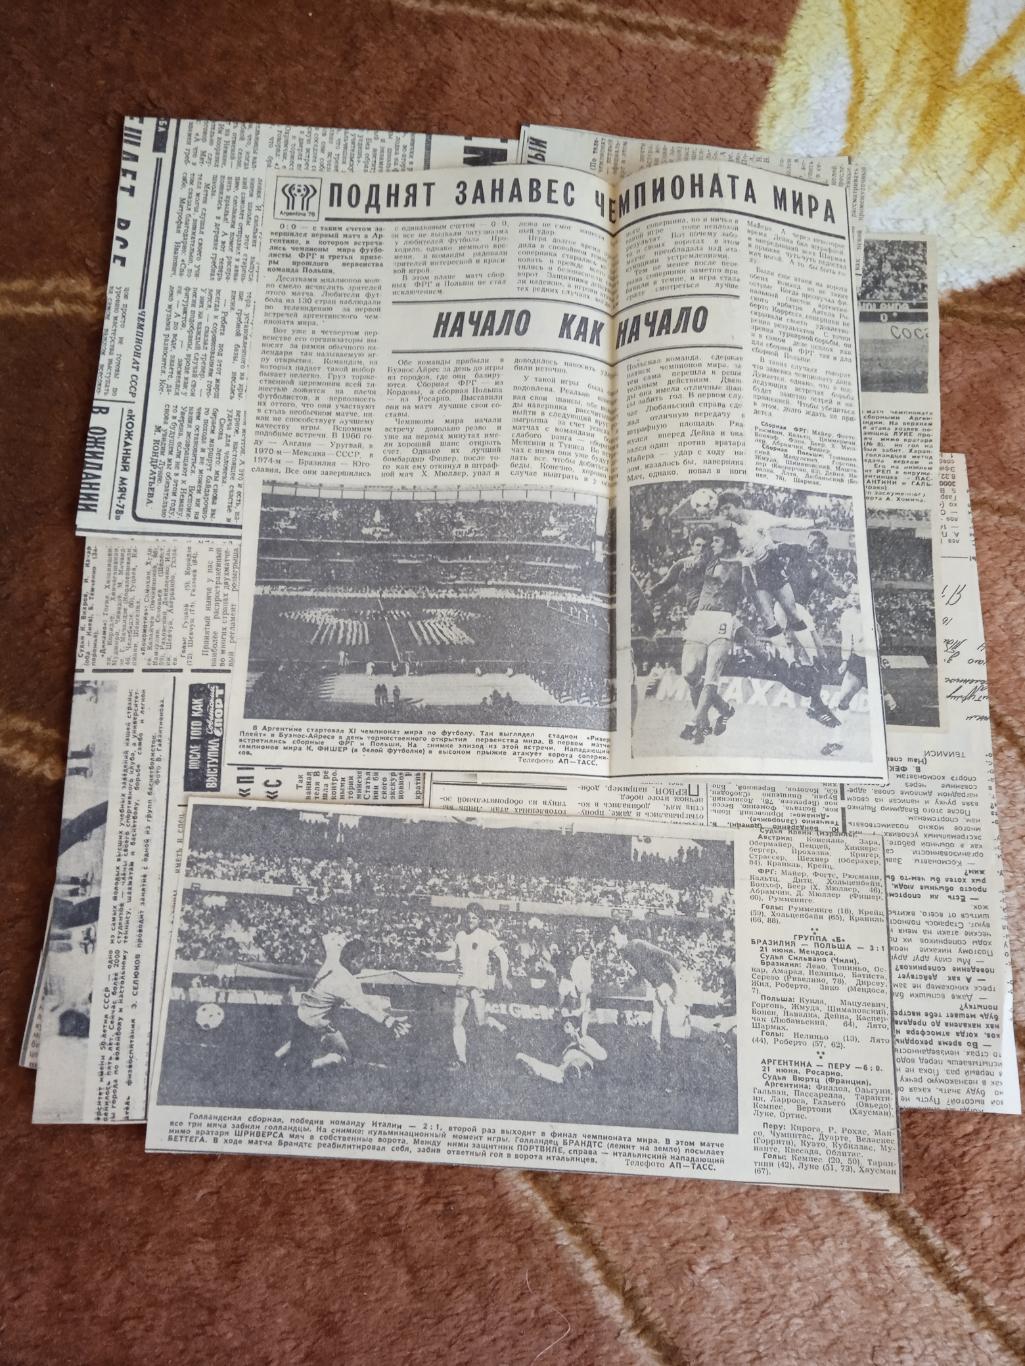 Статья.Фото.Футбол.Чемпионат мира 1978.Аргентина.Газета Советский спорт.